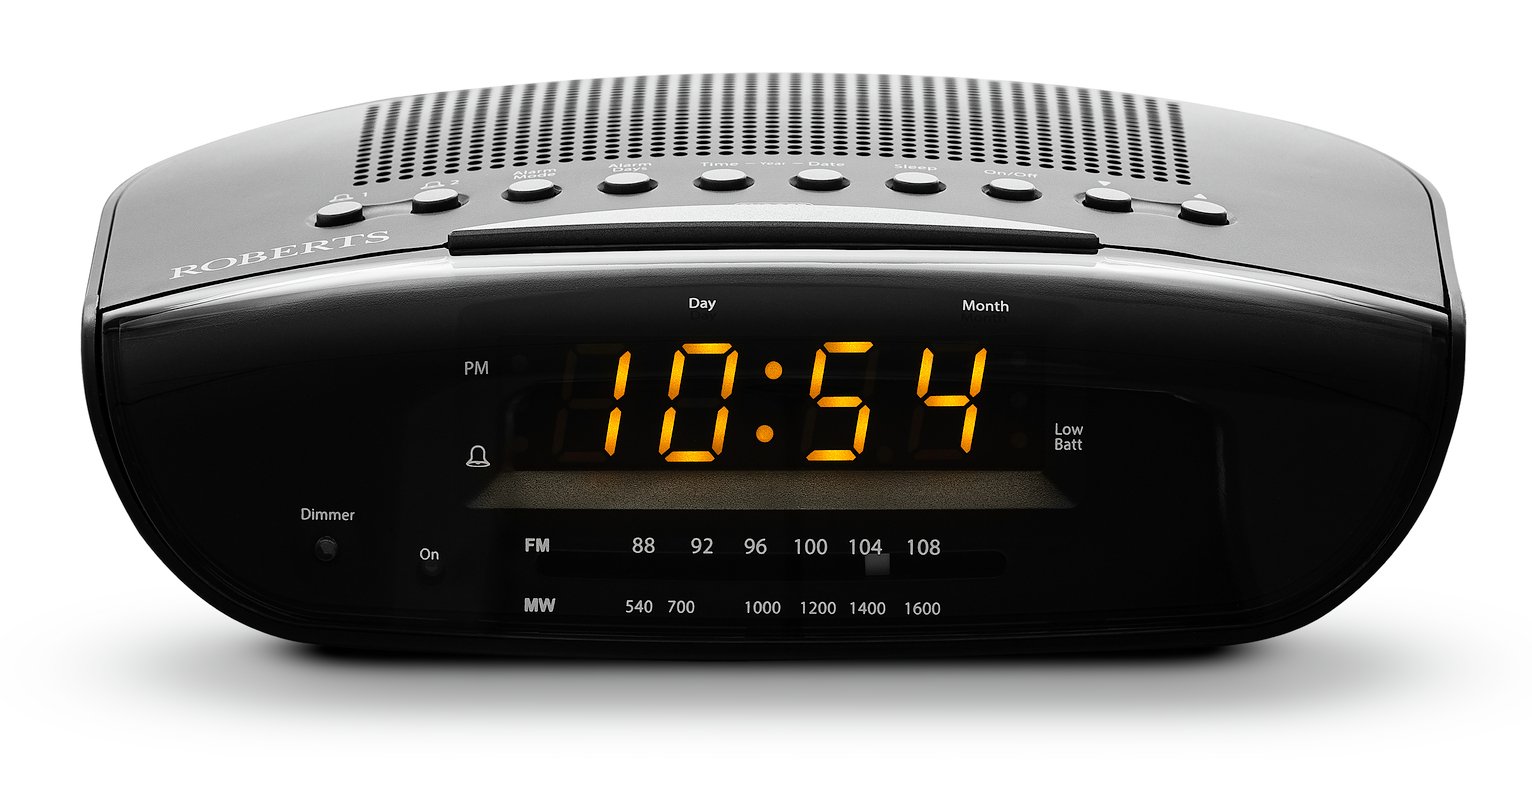 Roberts Chronologic VI FM Clock Radio Review